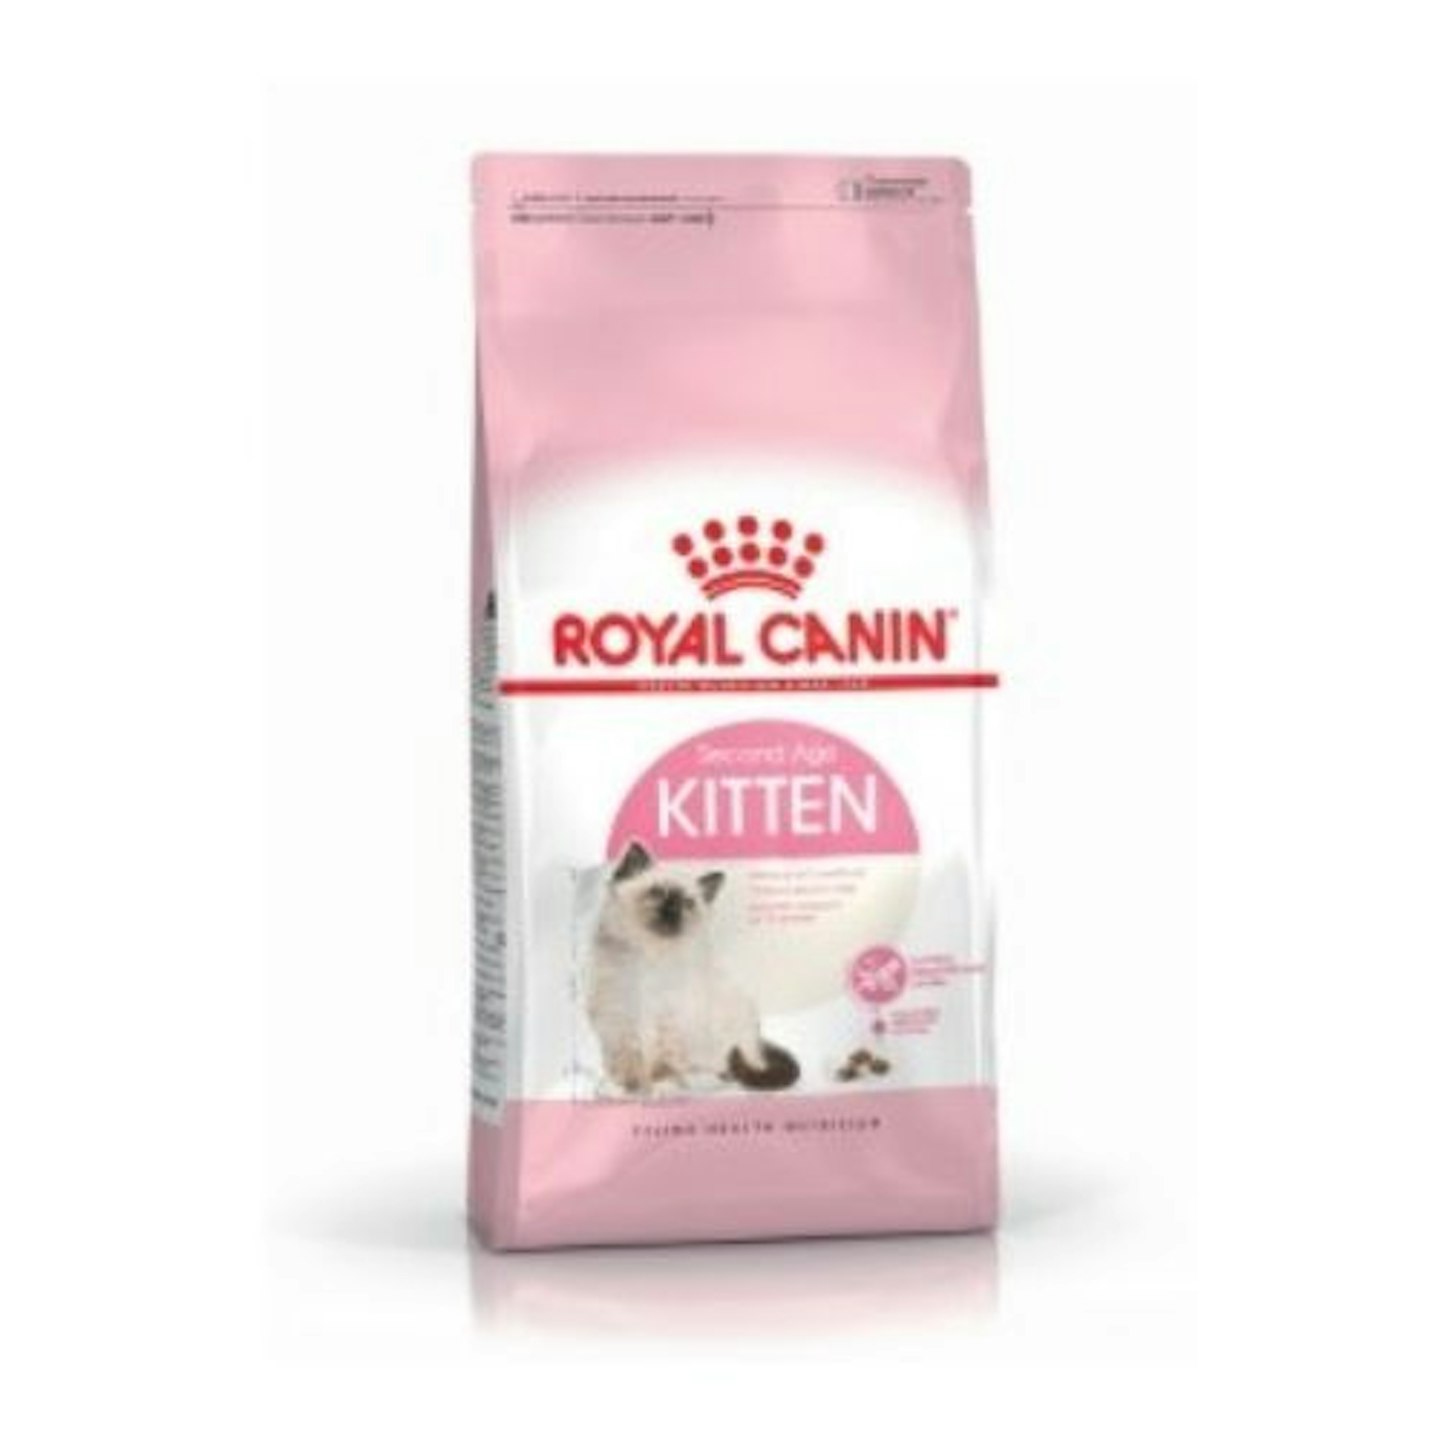 Royal Canin kitten food bag